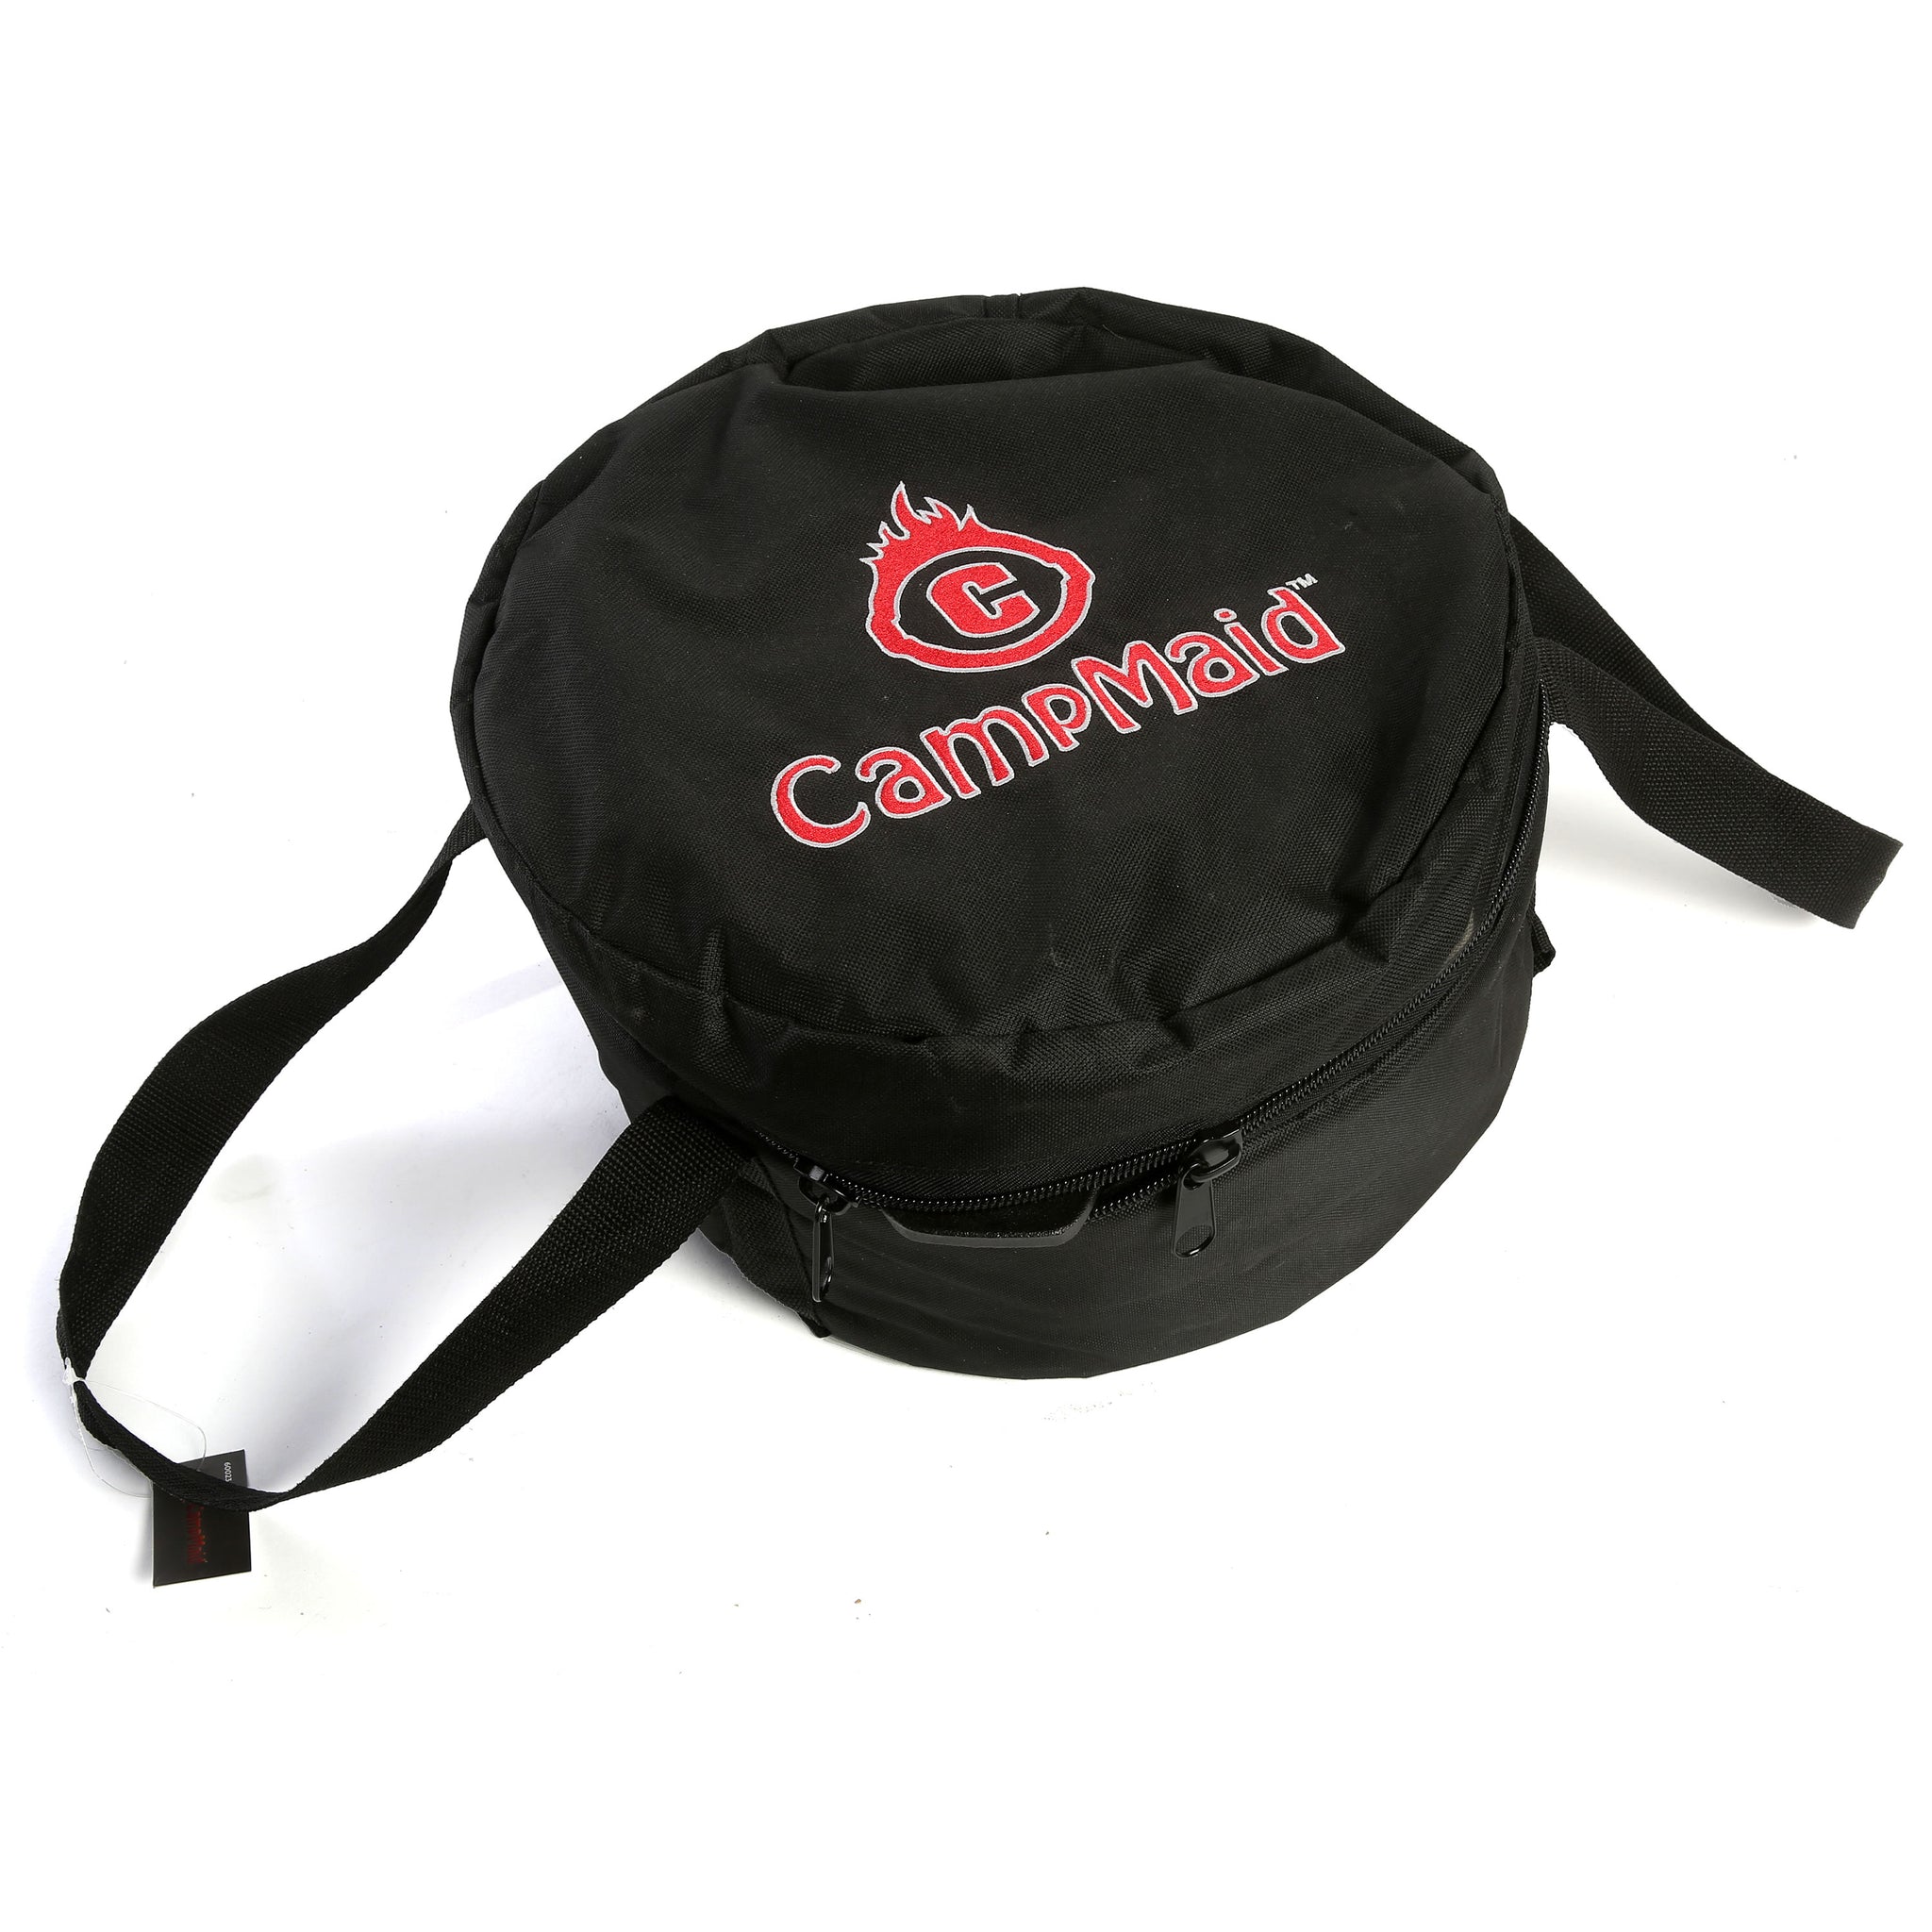 Campmaid Mega Carry Bag for Dutch Oven